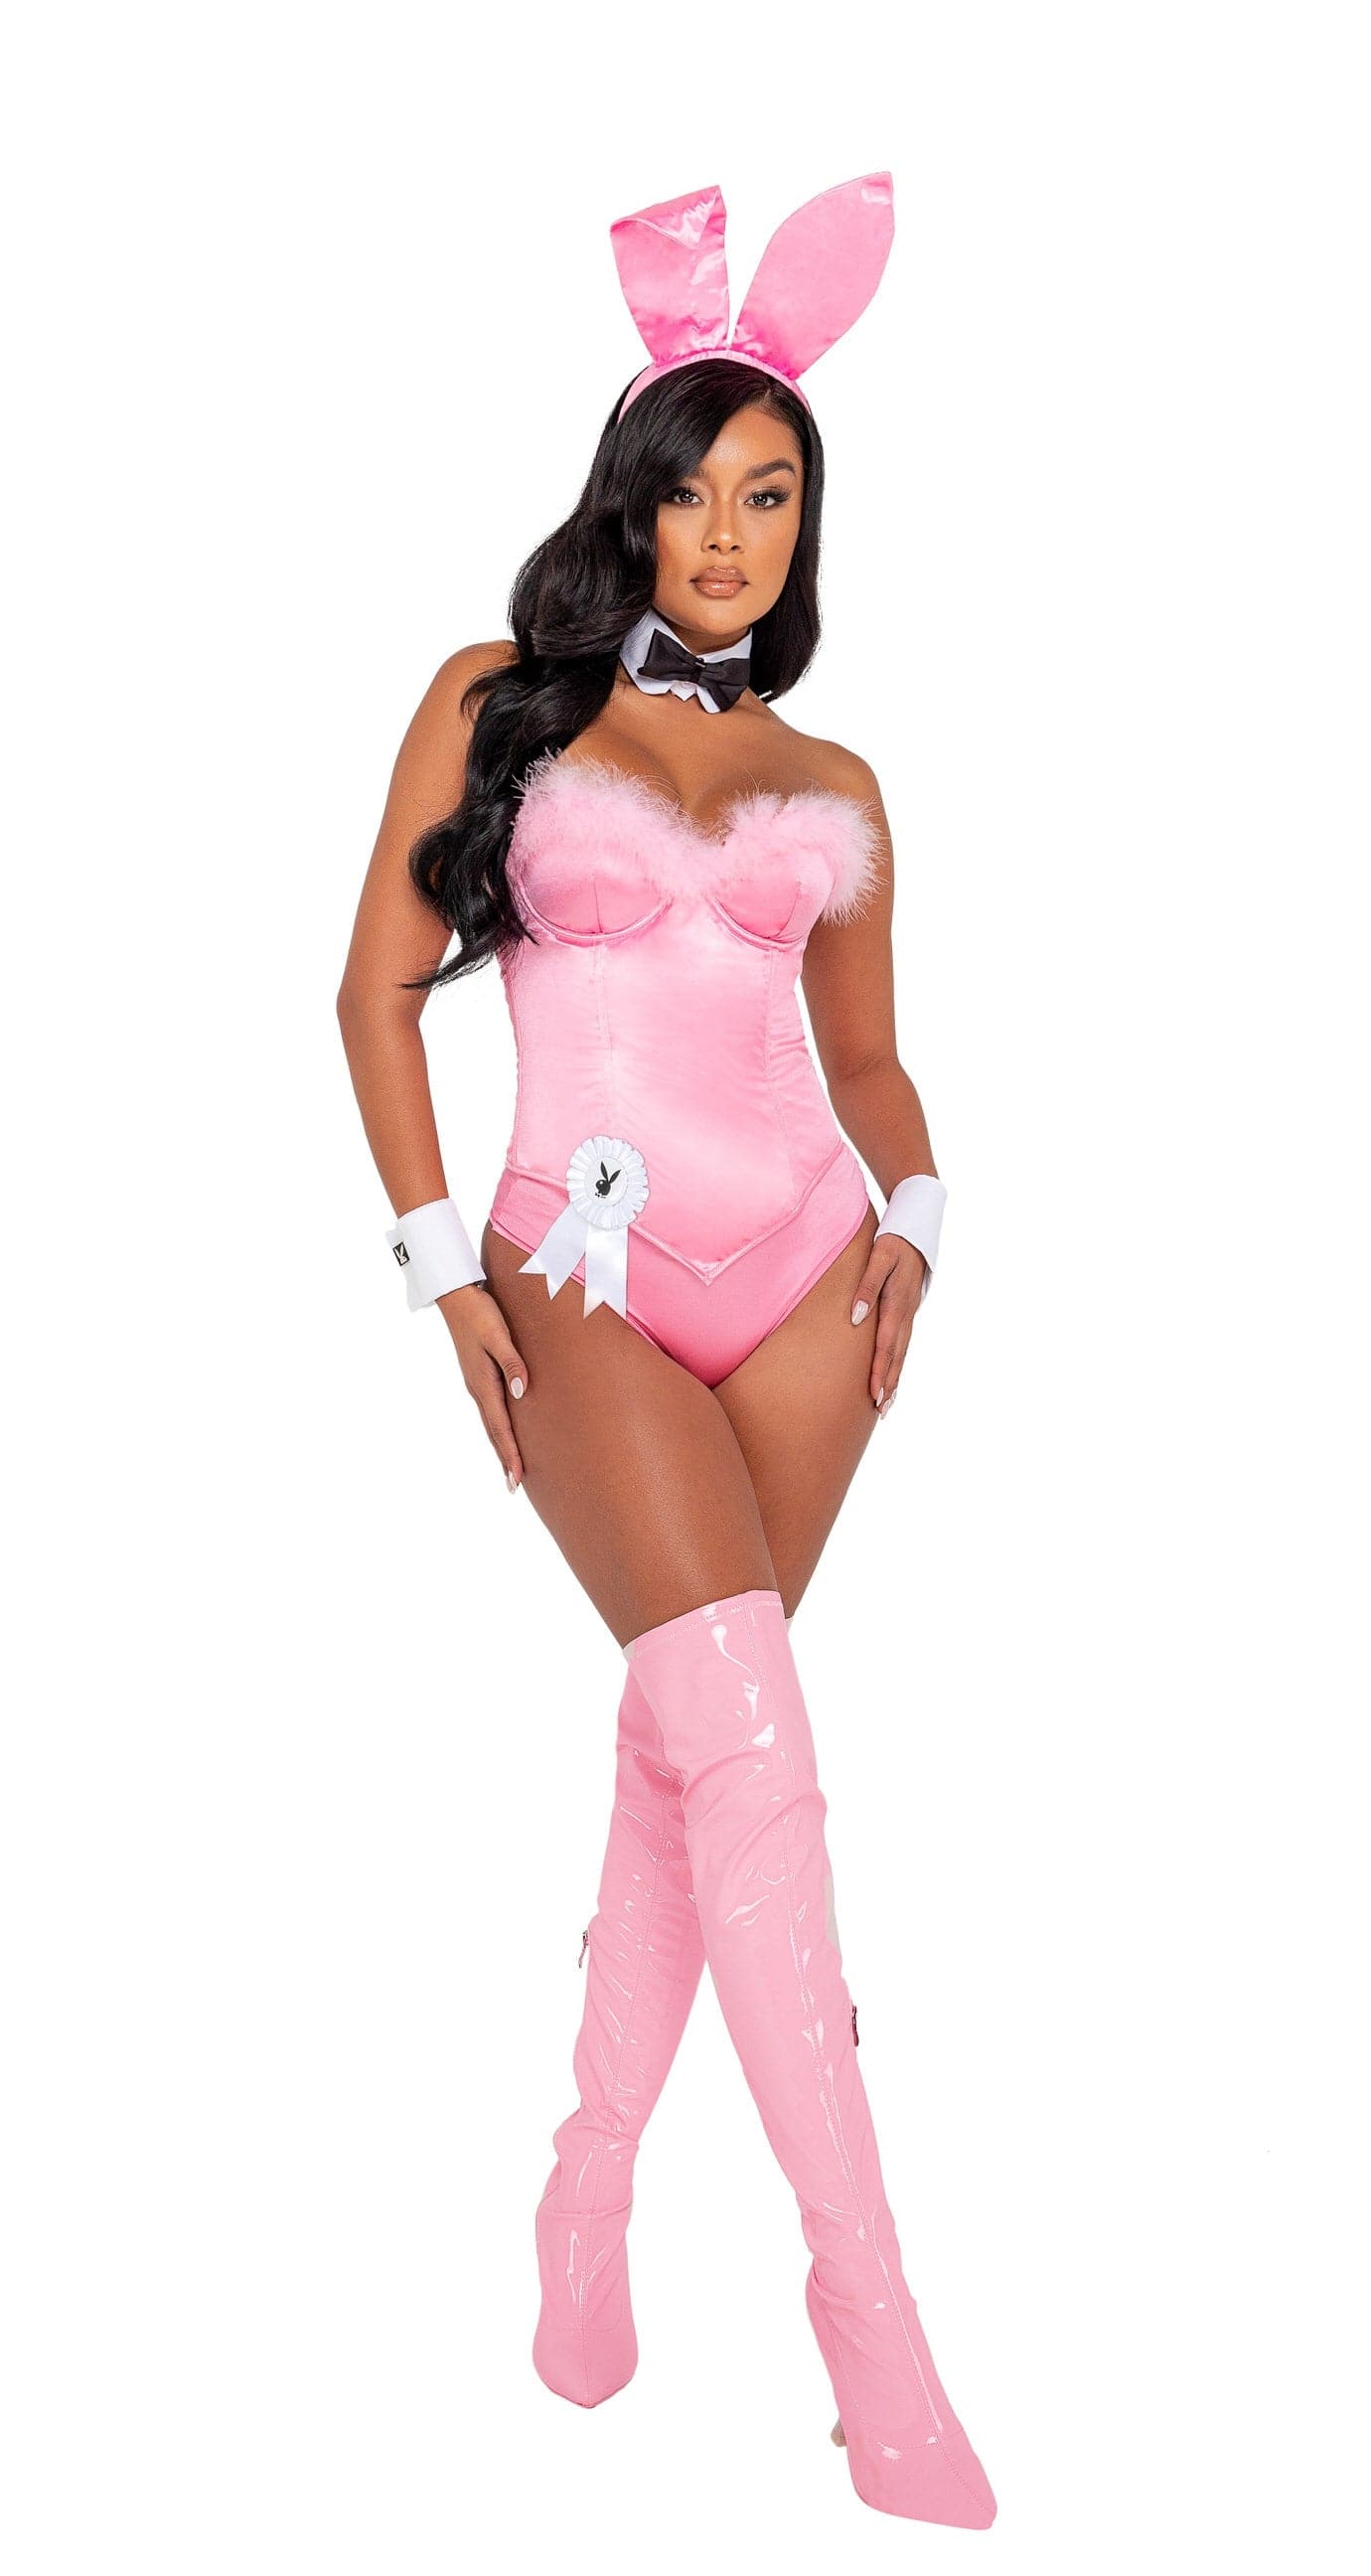 9pc. Official Playboy Bunny Glamorous Boudoir Bunny Women's Costume - For Love of Lingerie